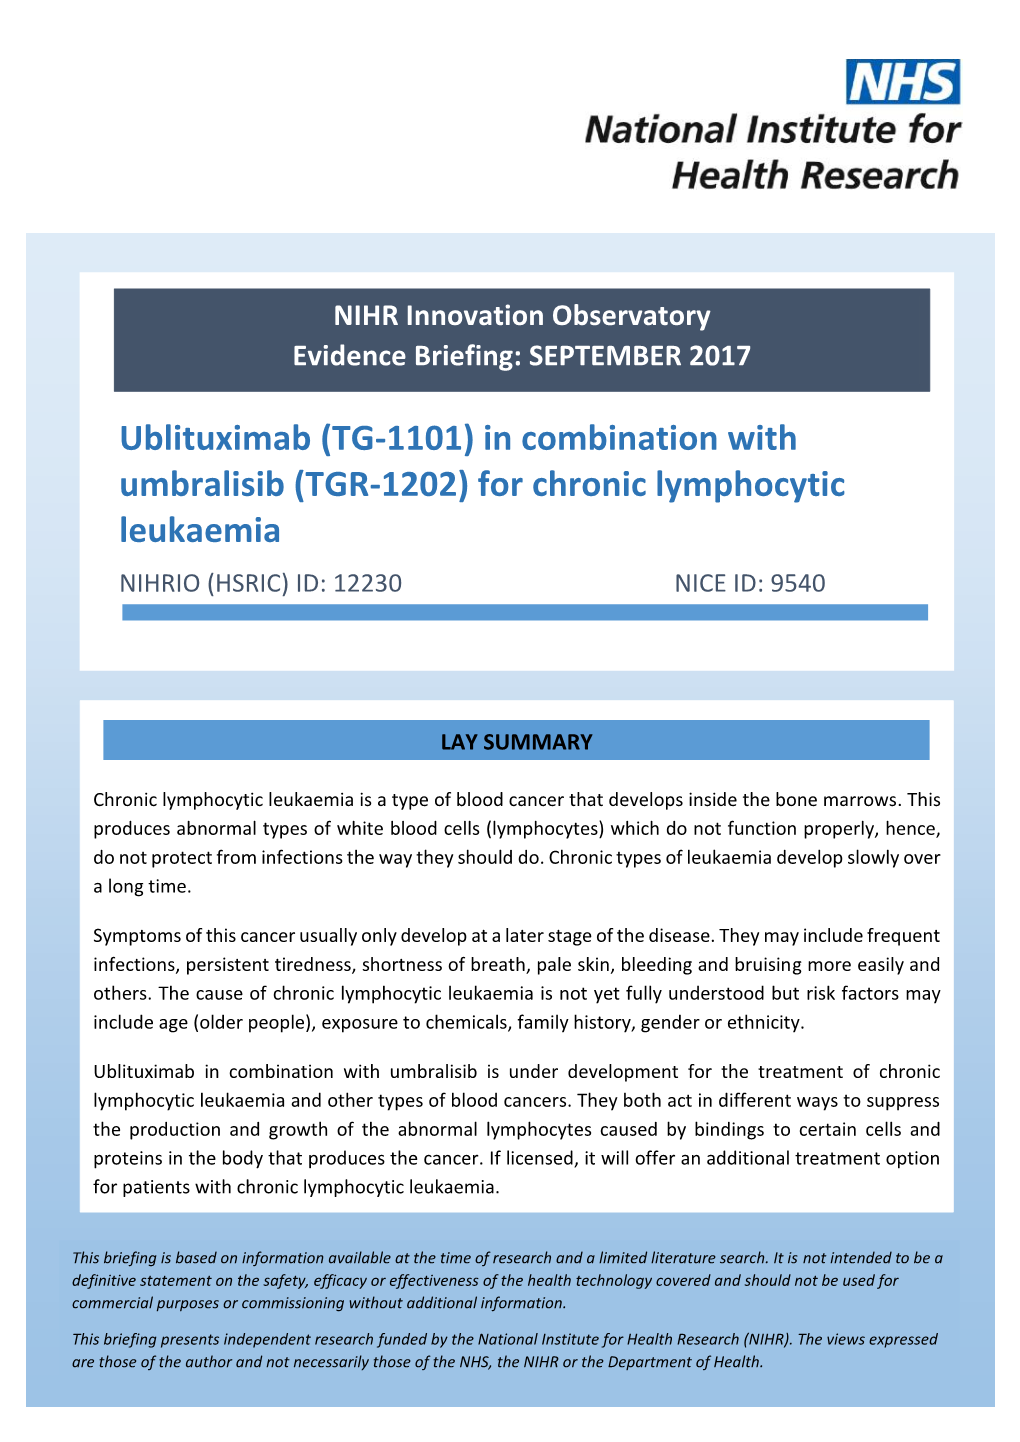 Ublituximab (TG-1101) in Combination with Umbralisib (TGR-1202) for Chronic Lymphocytic Leukaemia NIHRIO (HSRIC) ID: 12230 NICE ID: 9540